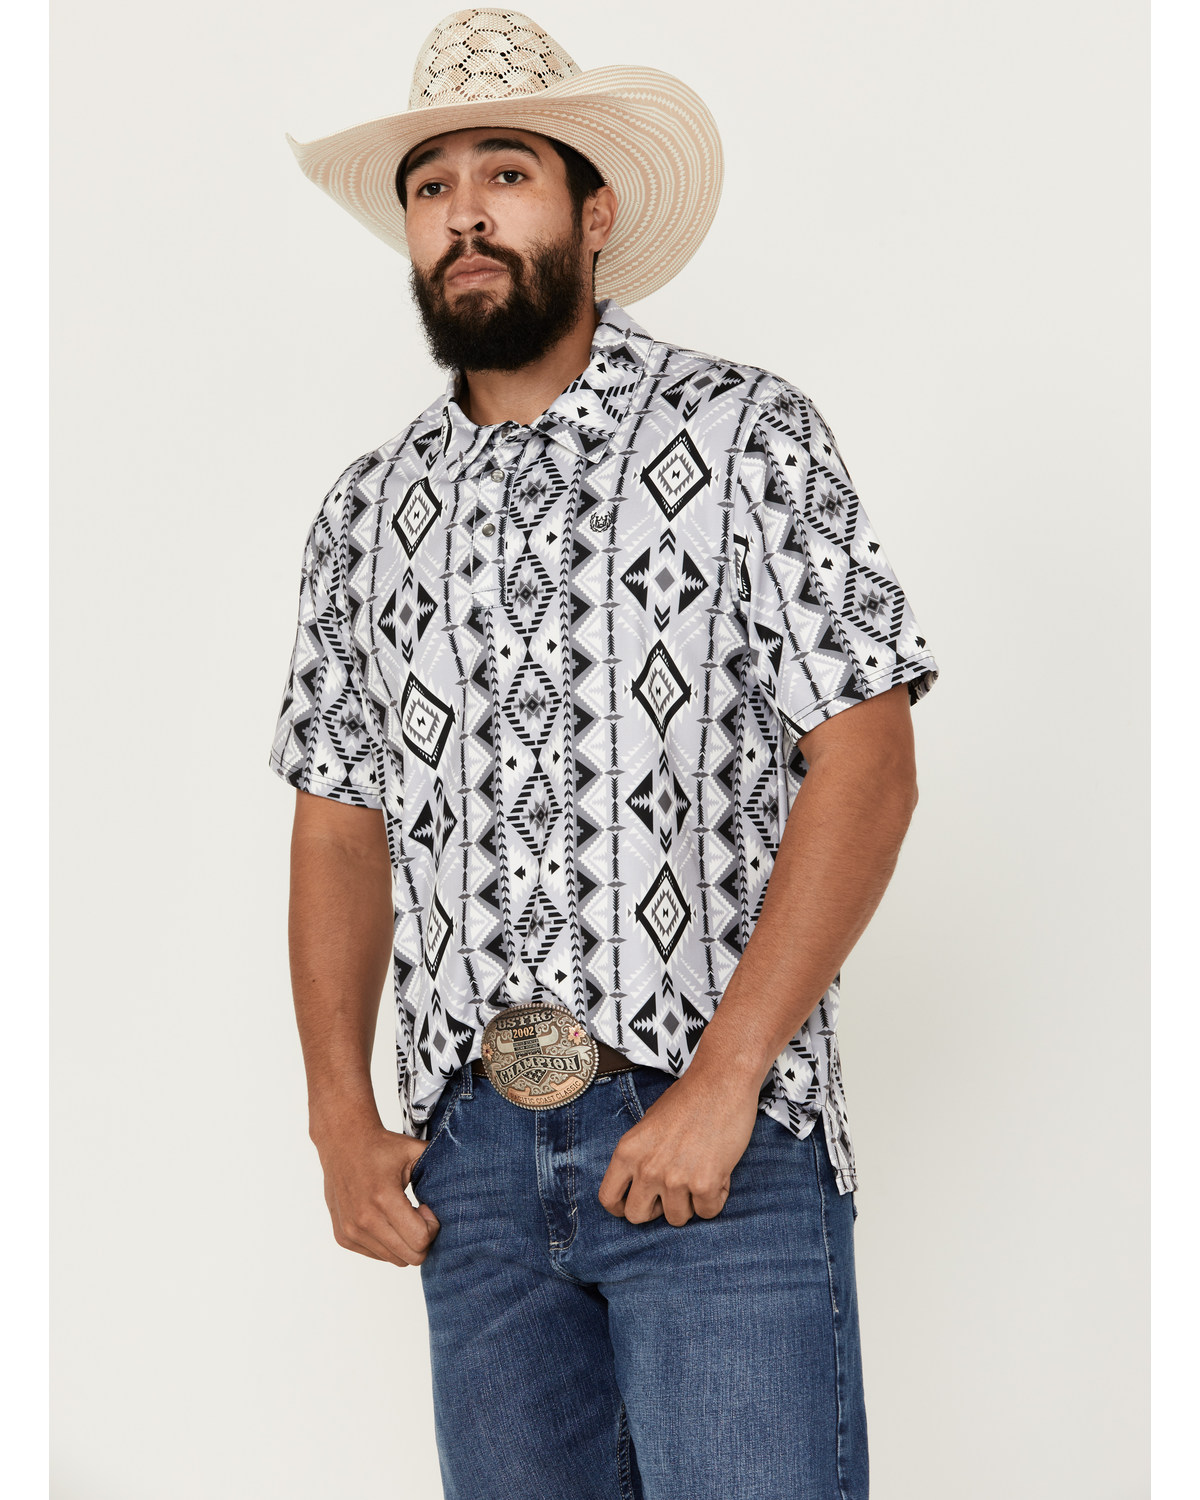 Panhandle Men's Southwestern Print Short Sleeve Performance Polo Shirt